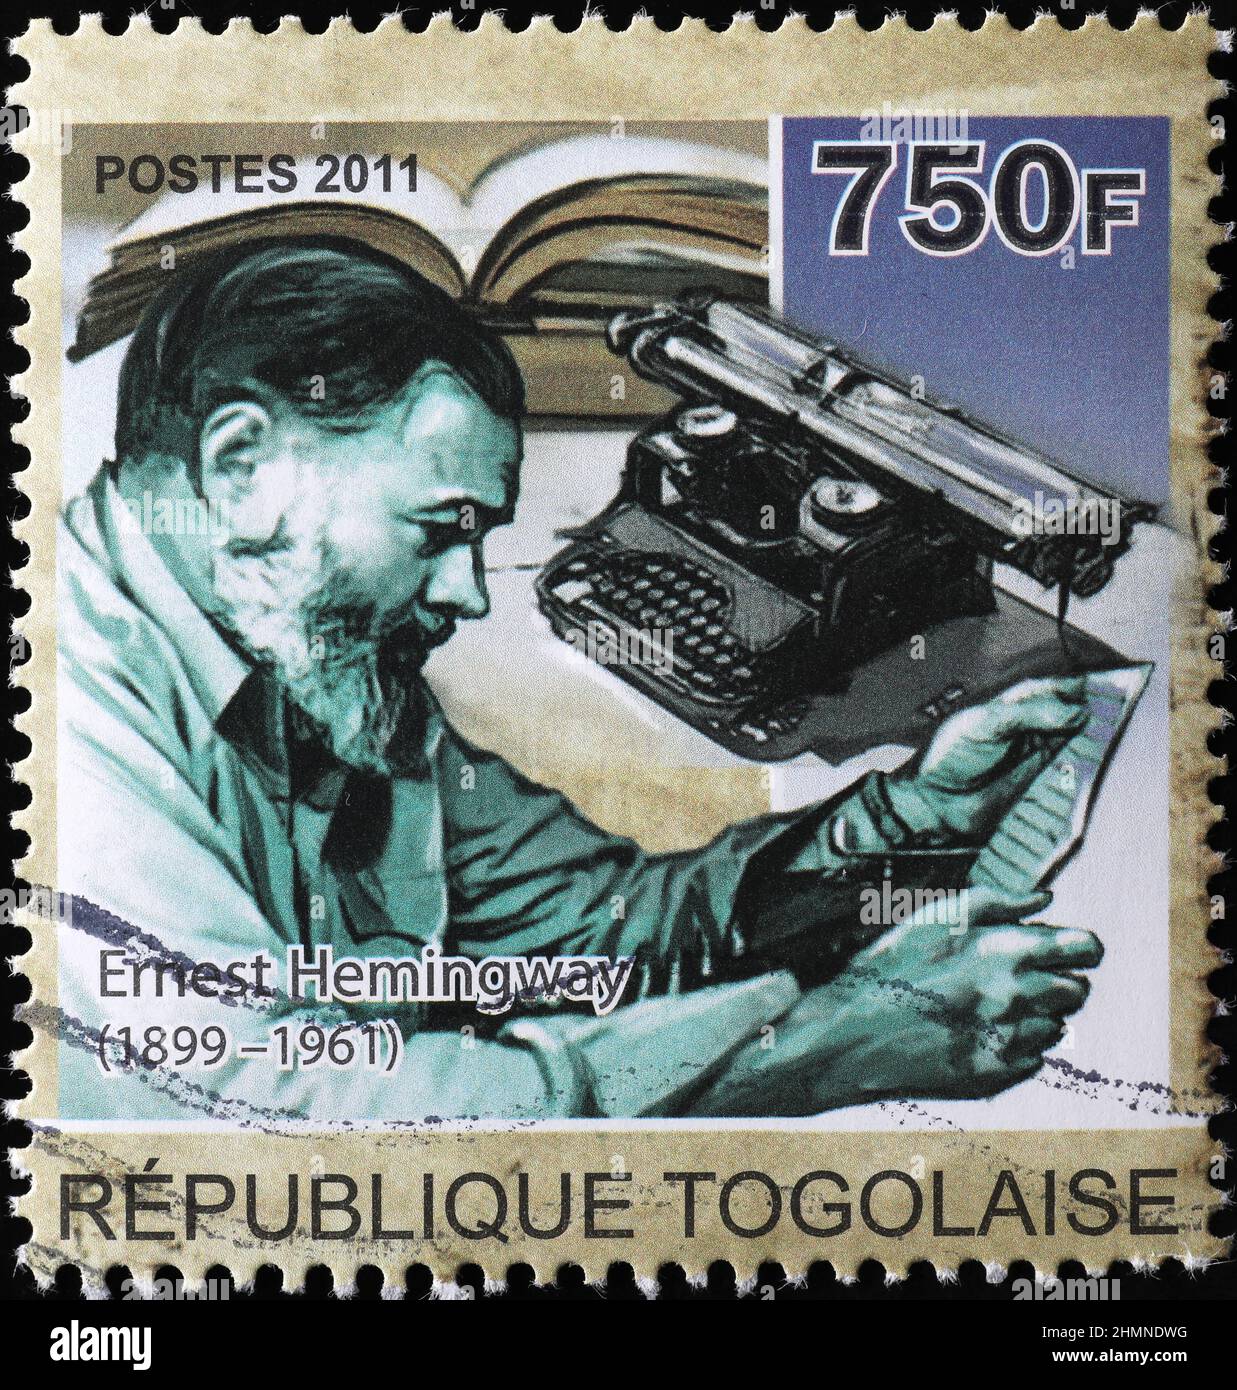 Ernest Hemingway and his typewriter on postage stamp Stock Photo